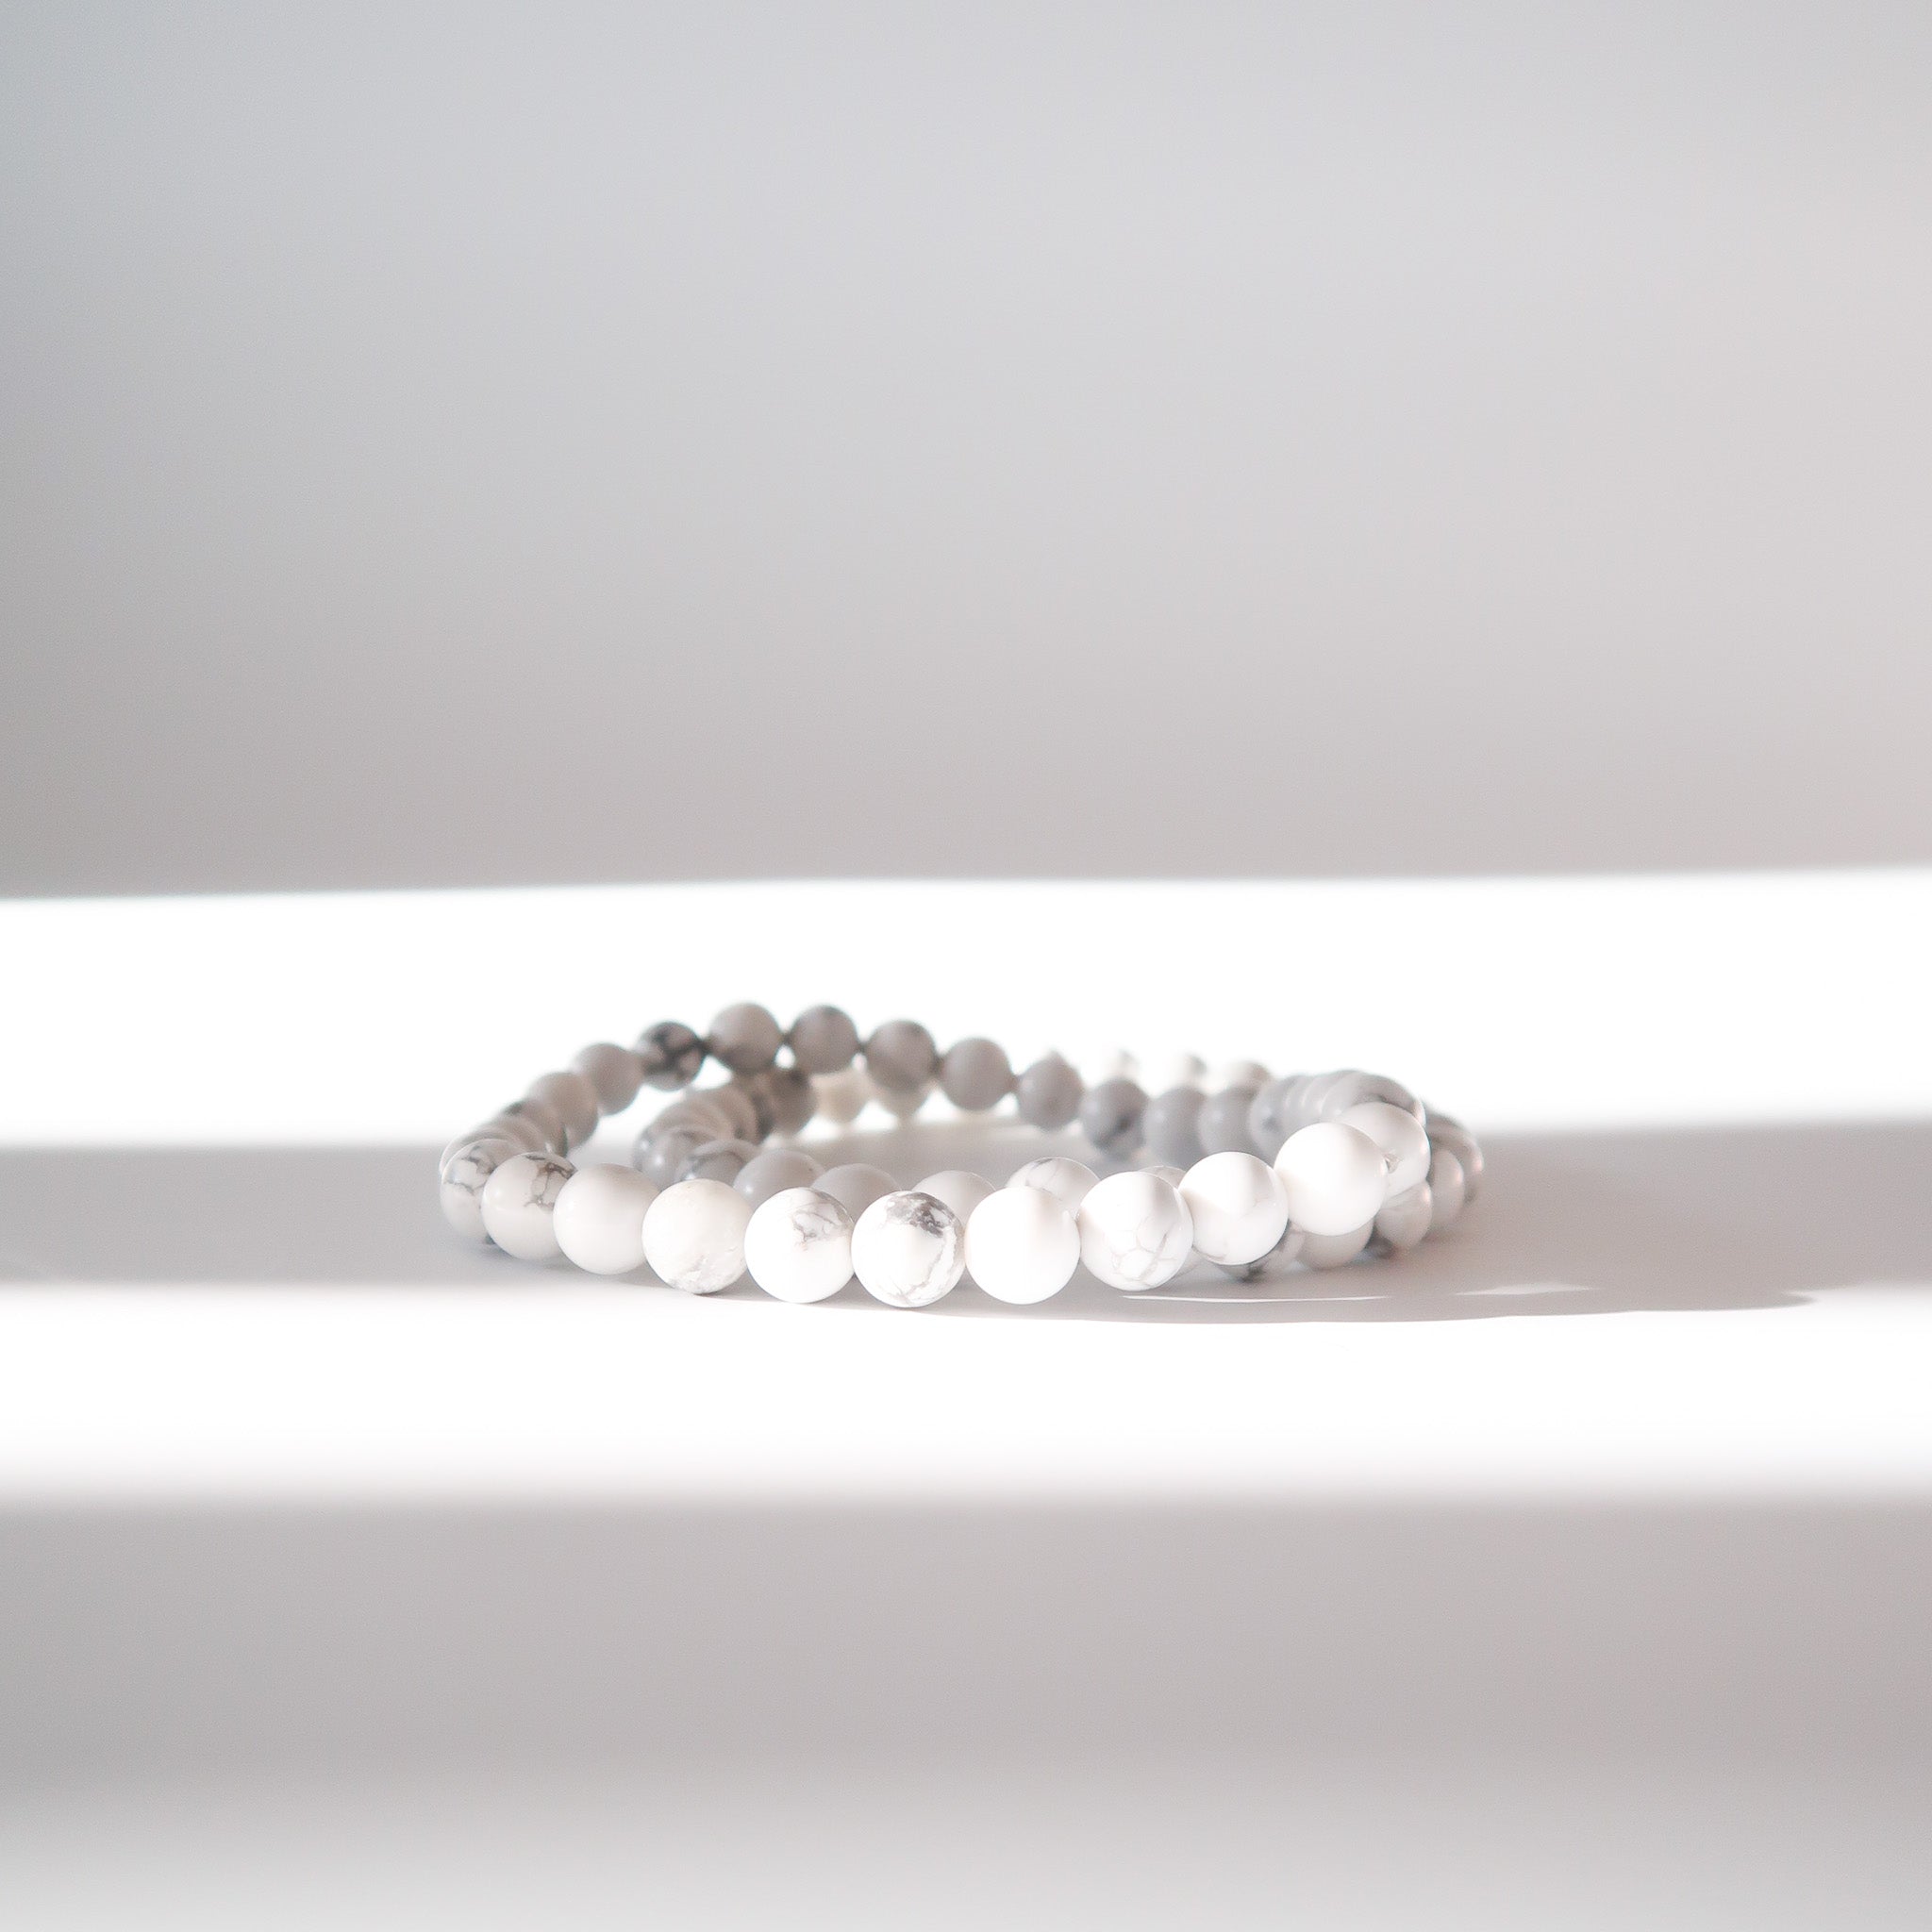 Polished Howlite Crystal Bracelets on a white background